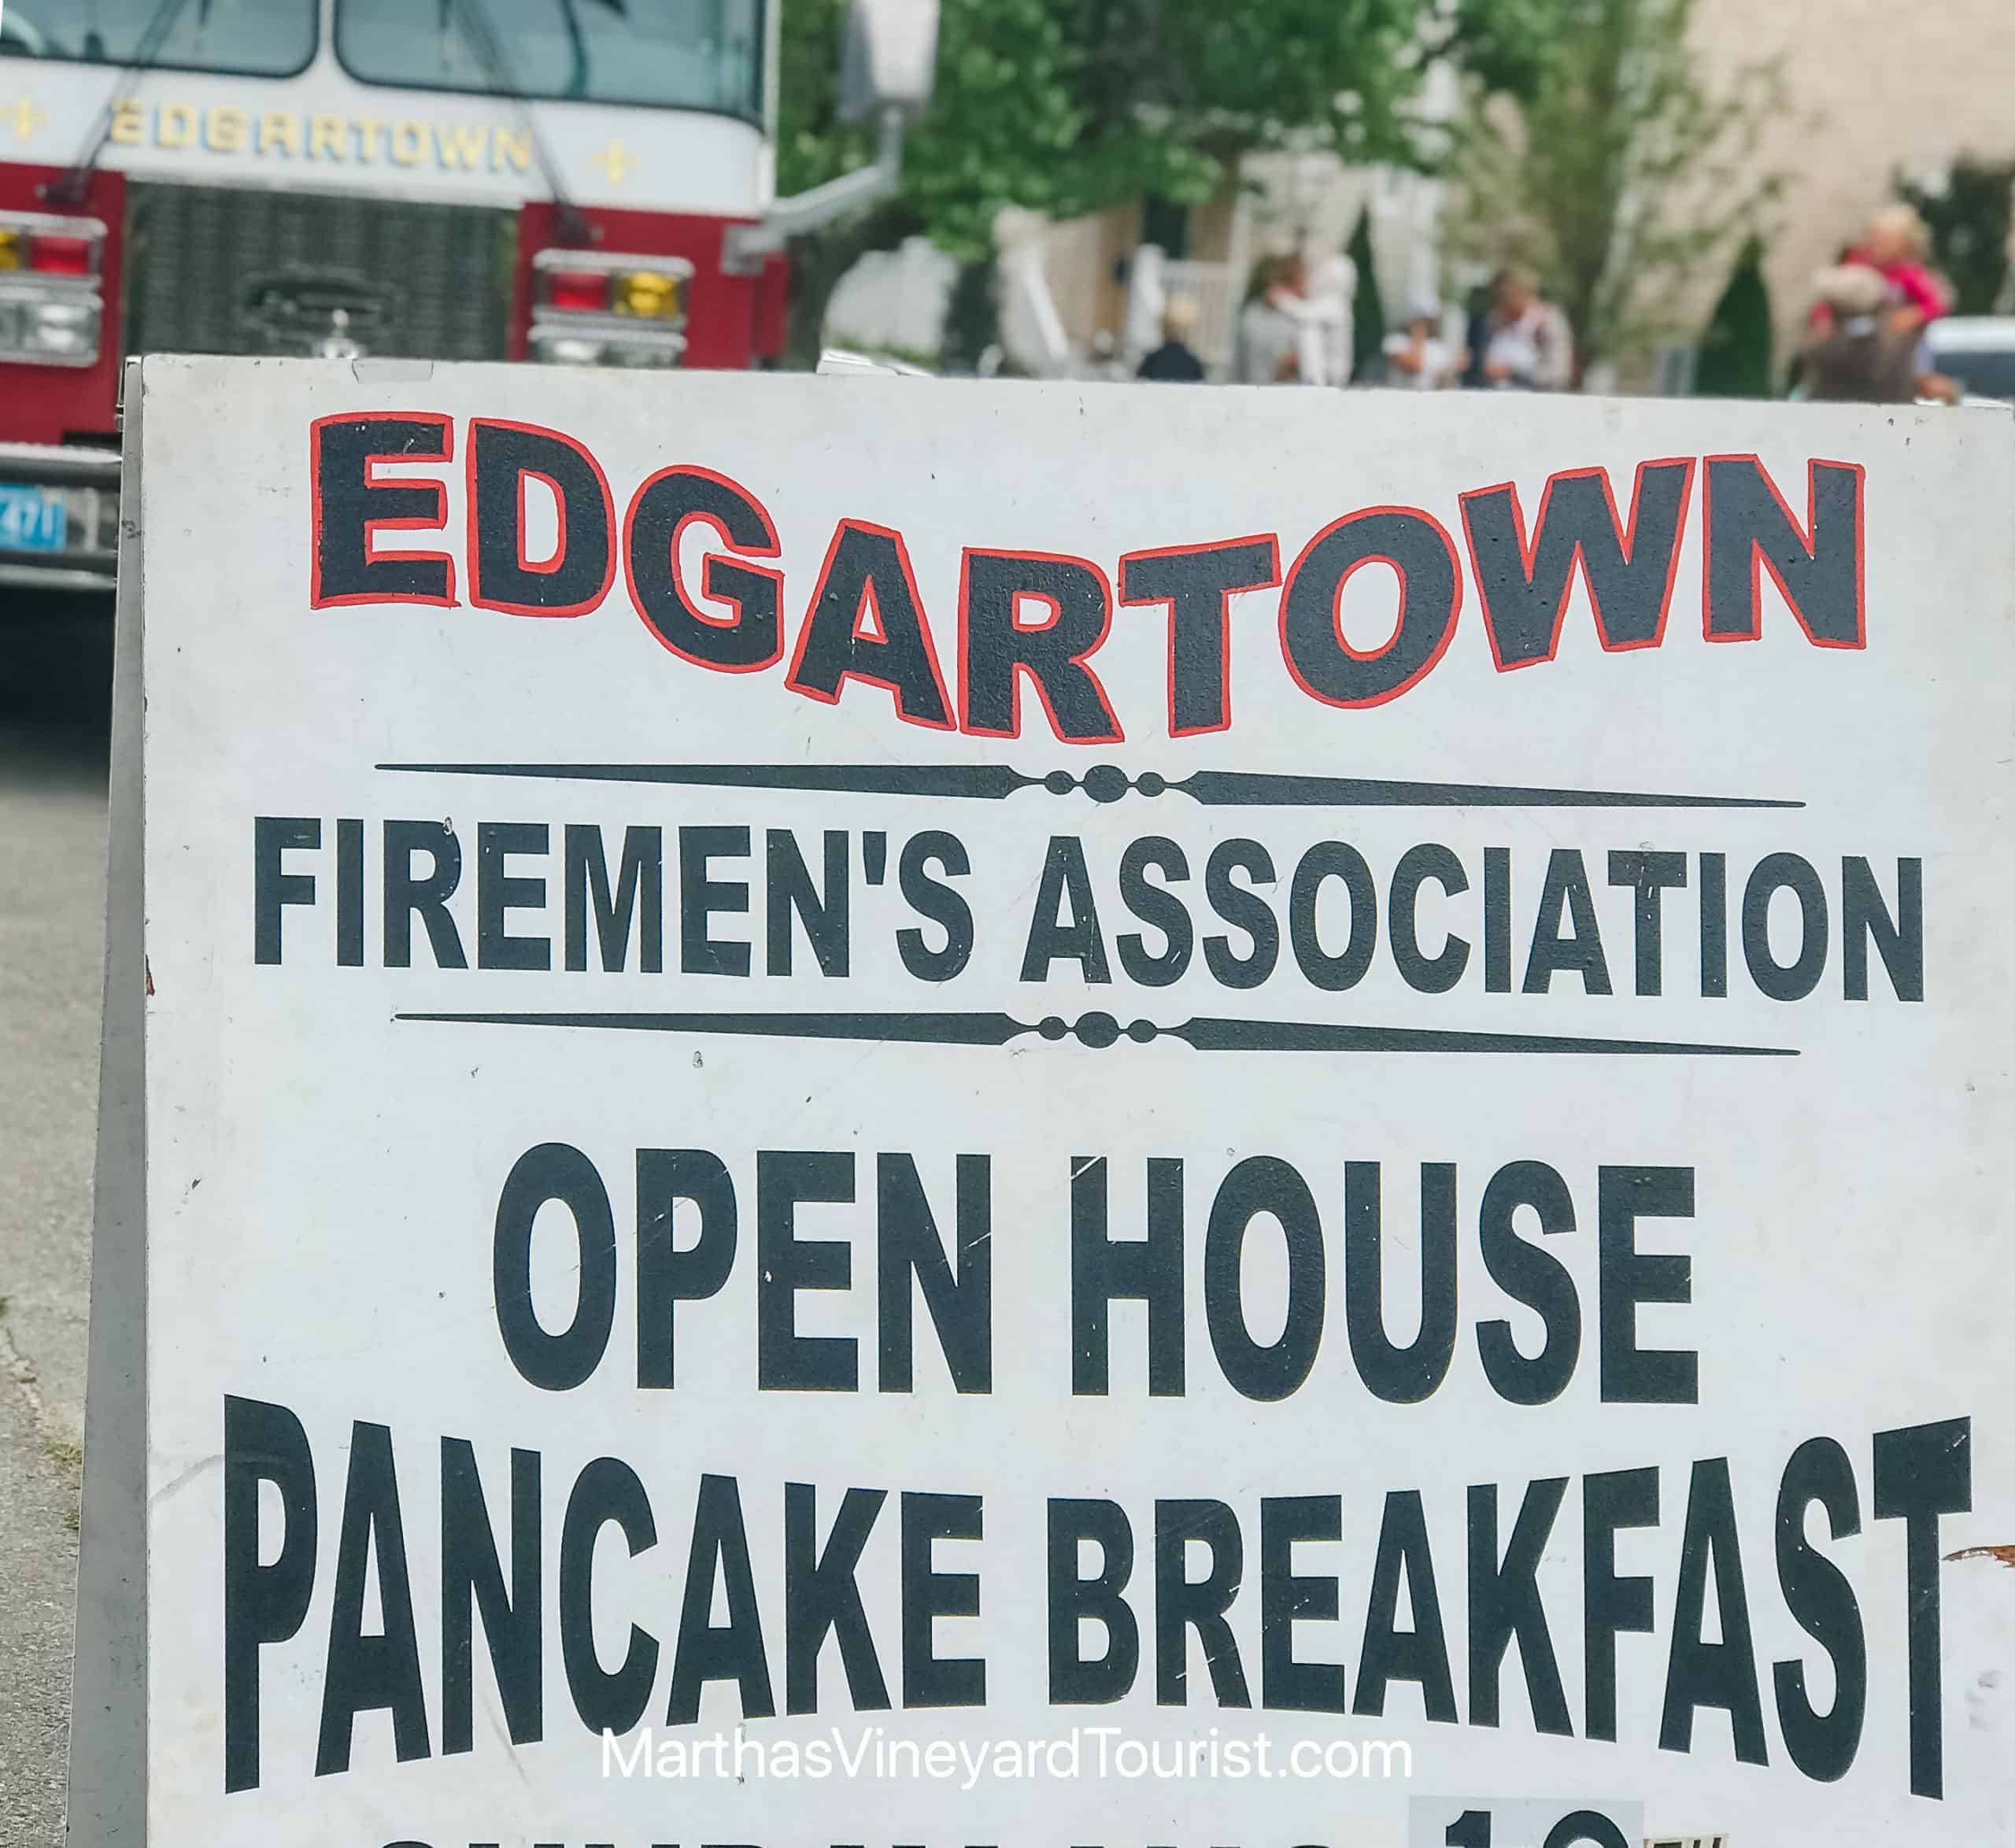 a sign with the text: Edgartown Firemen’s Association Open House Pancake Breakfast